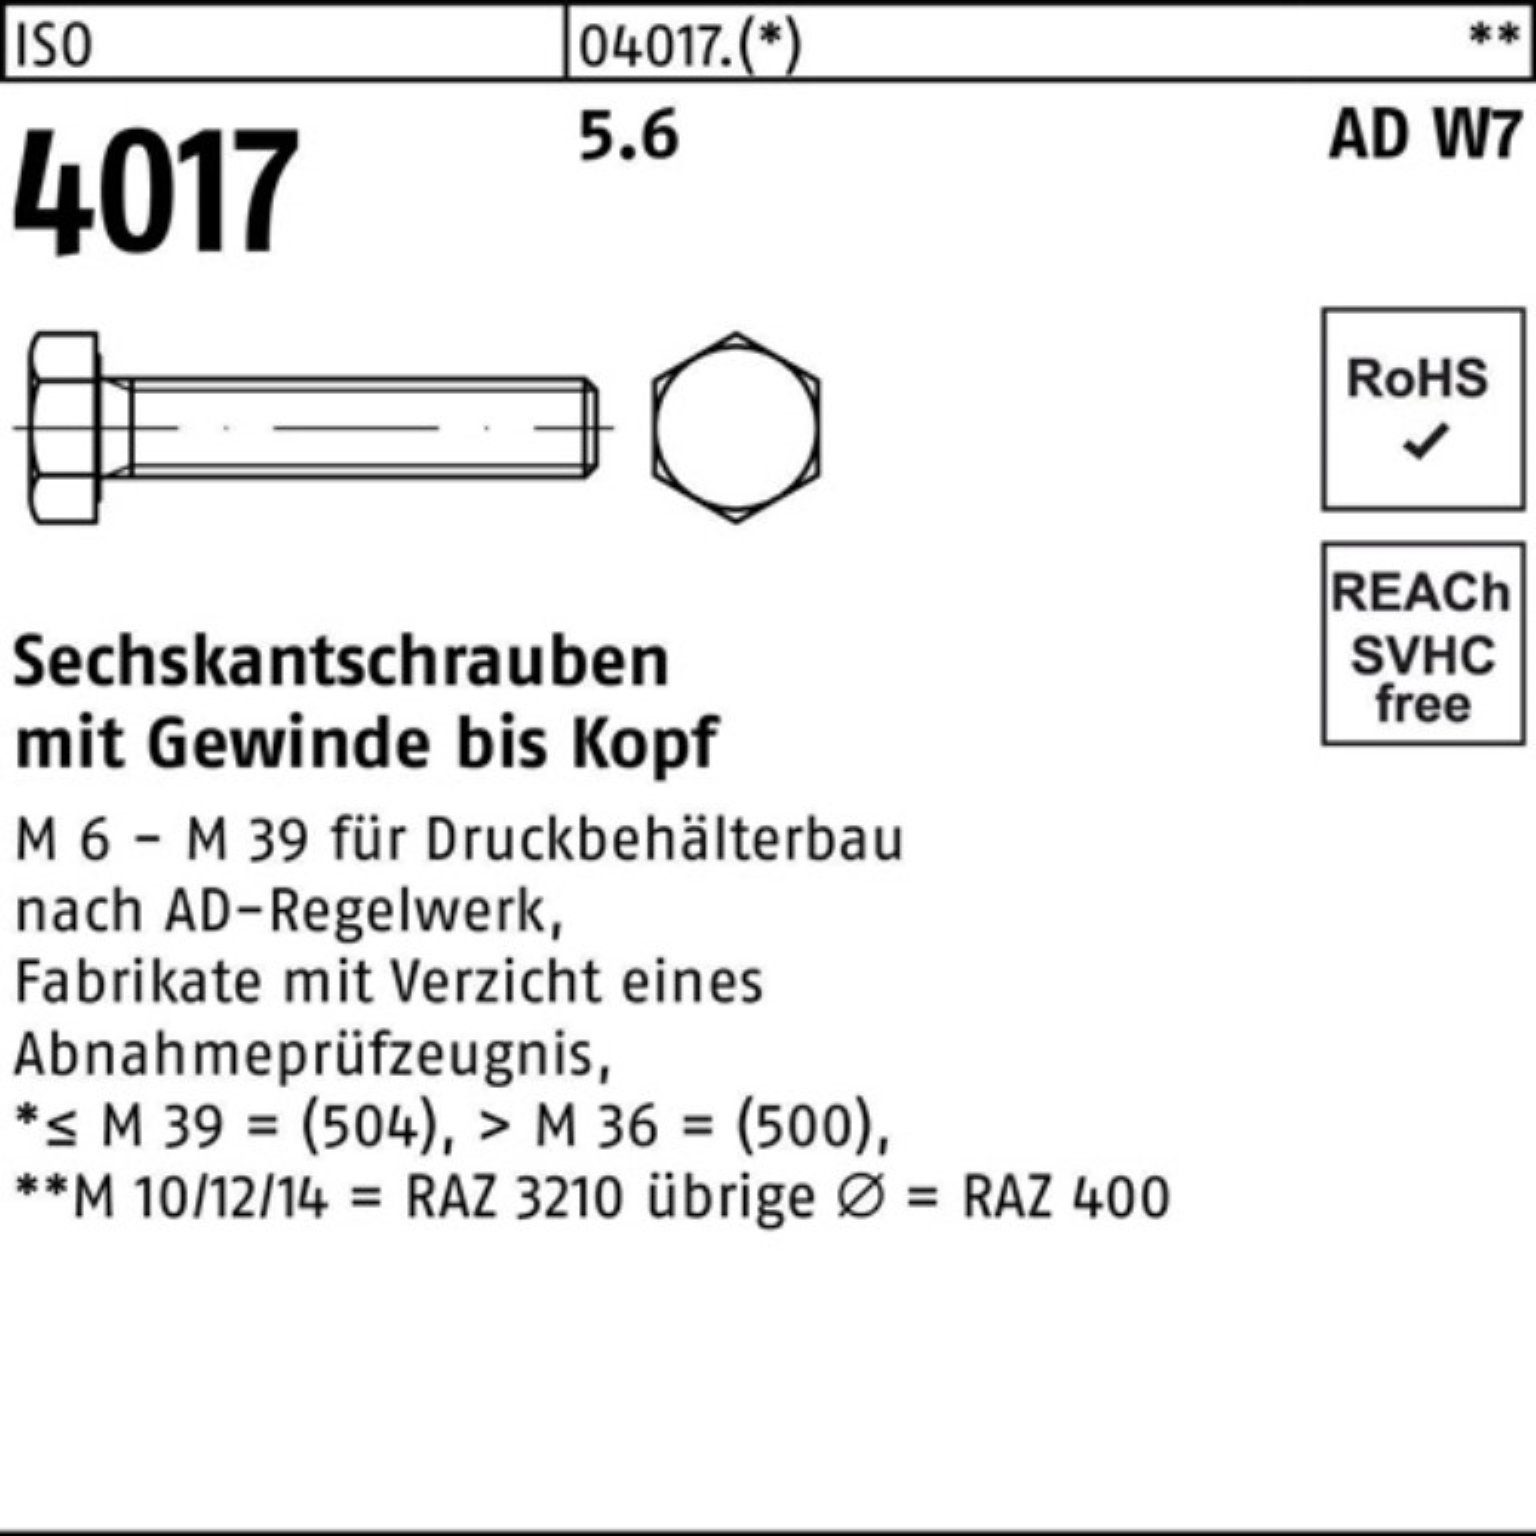 Bufab Sechskantschraube 200er Pack Sechskantschraube ISO 4017 VG M10x 20 5.6 AD W7 200 Stück